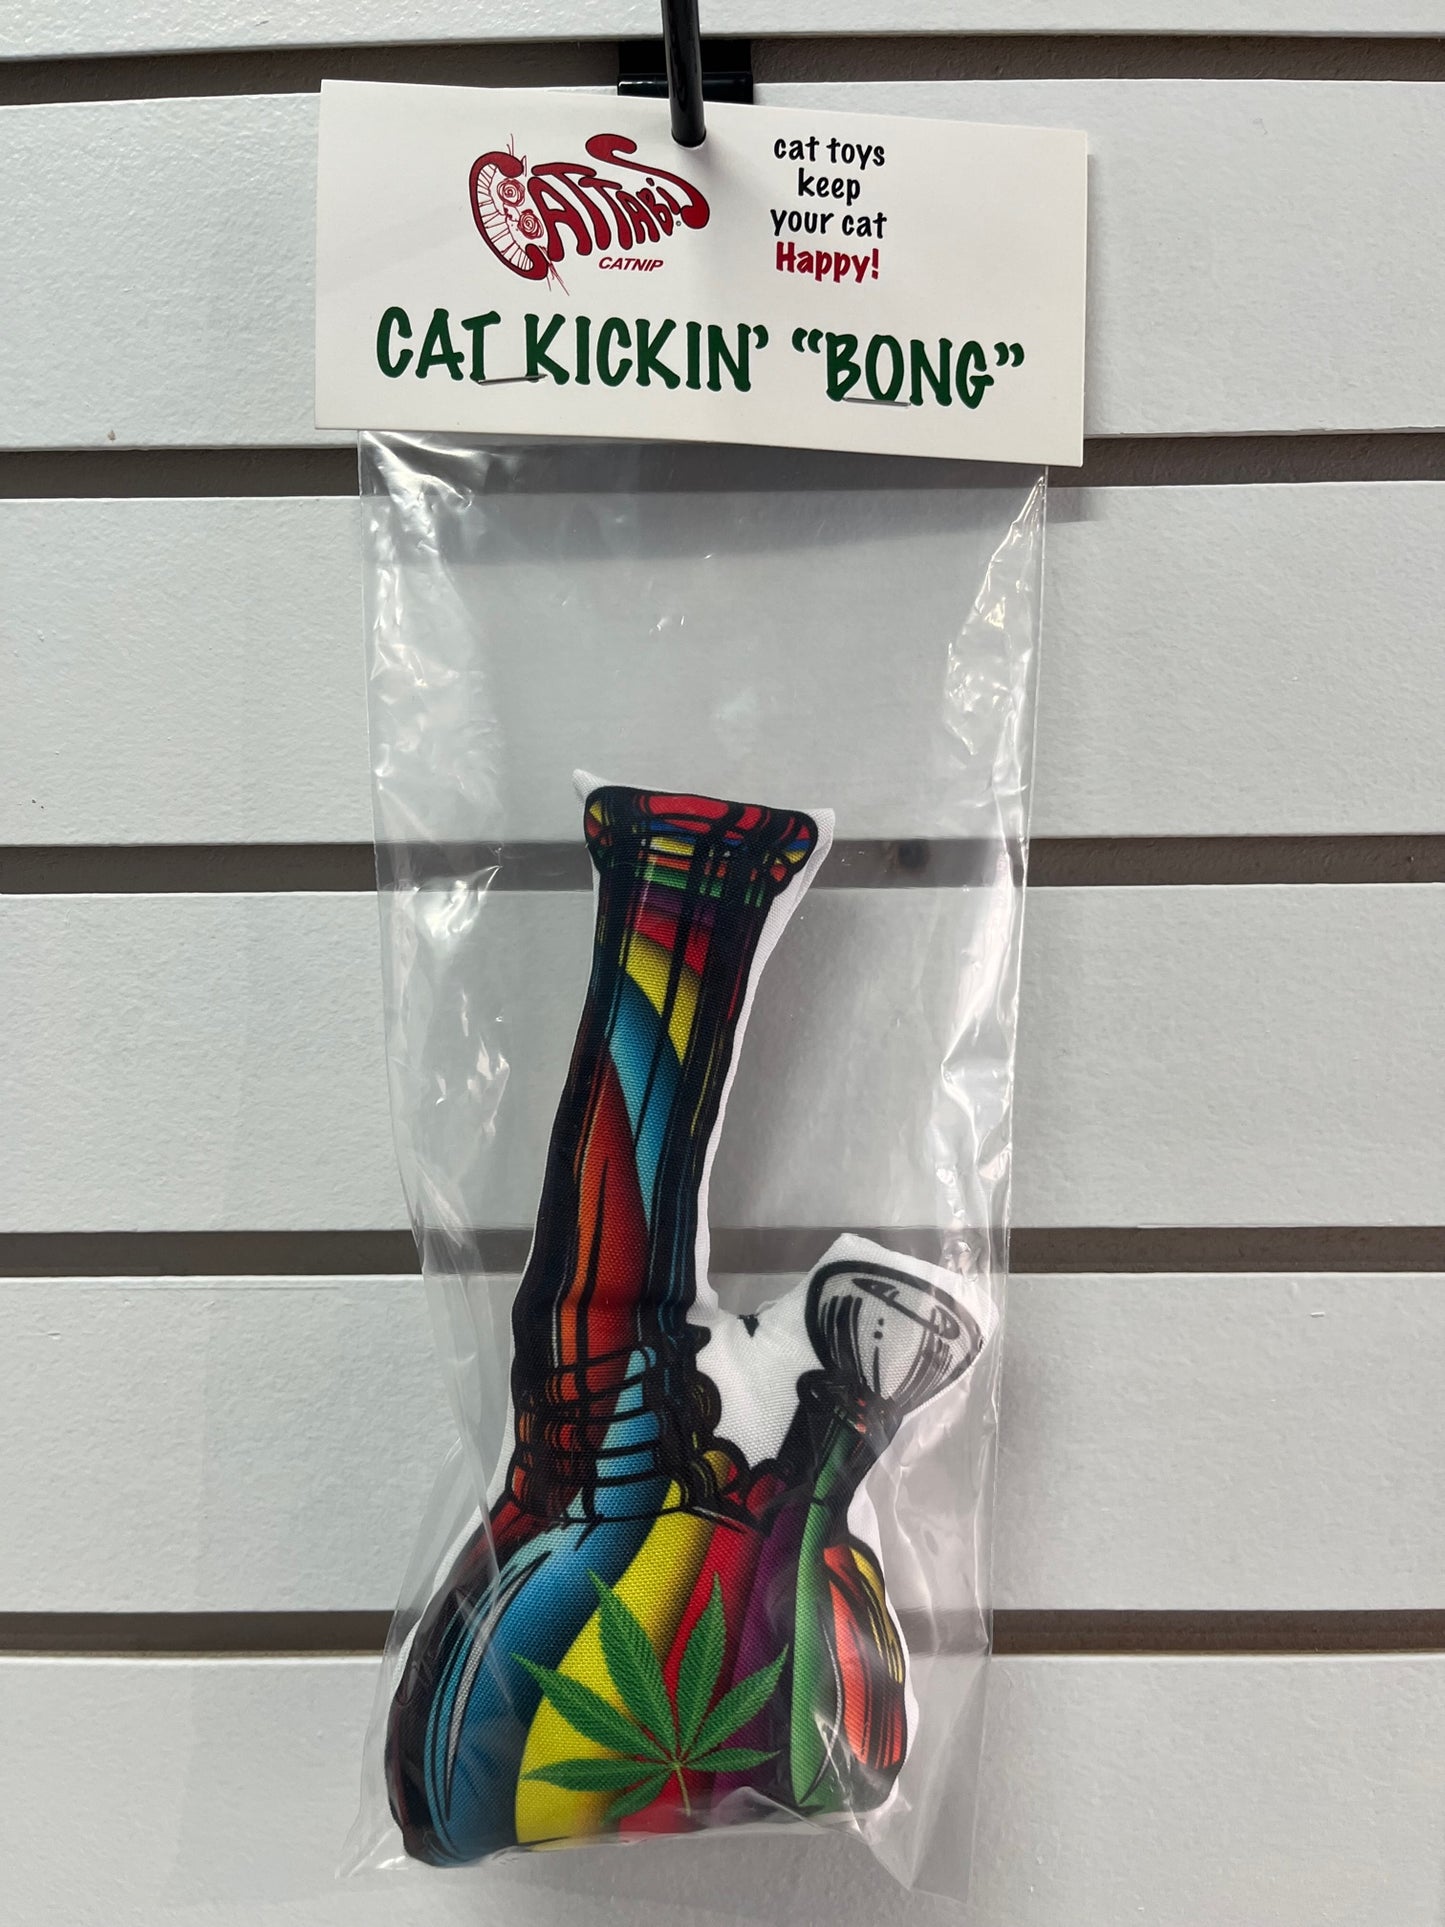 Cat Kickin' Catnip "Bong"